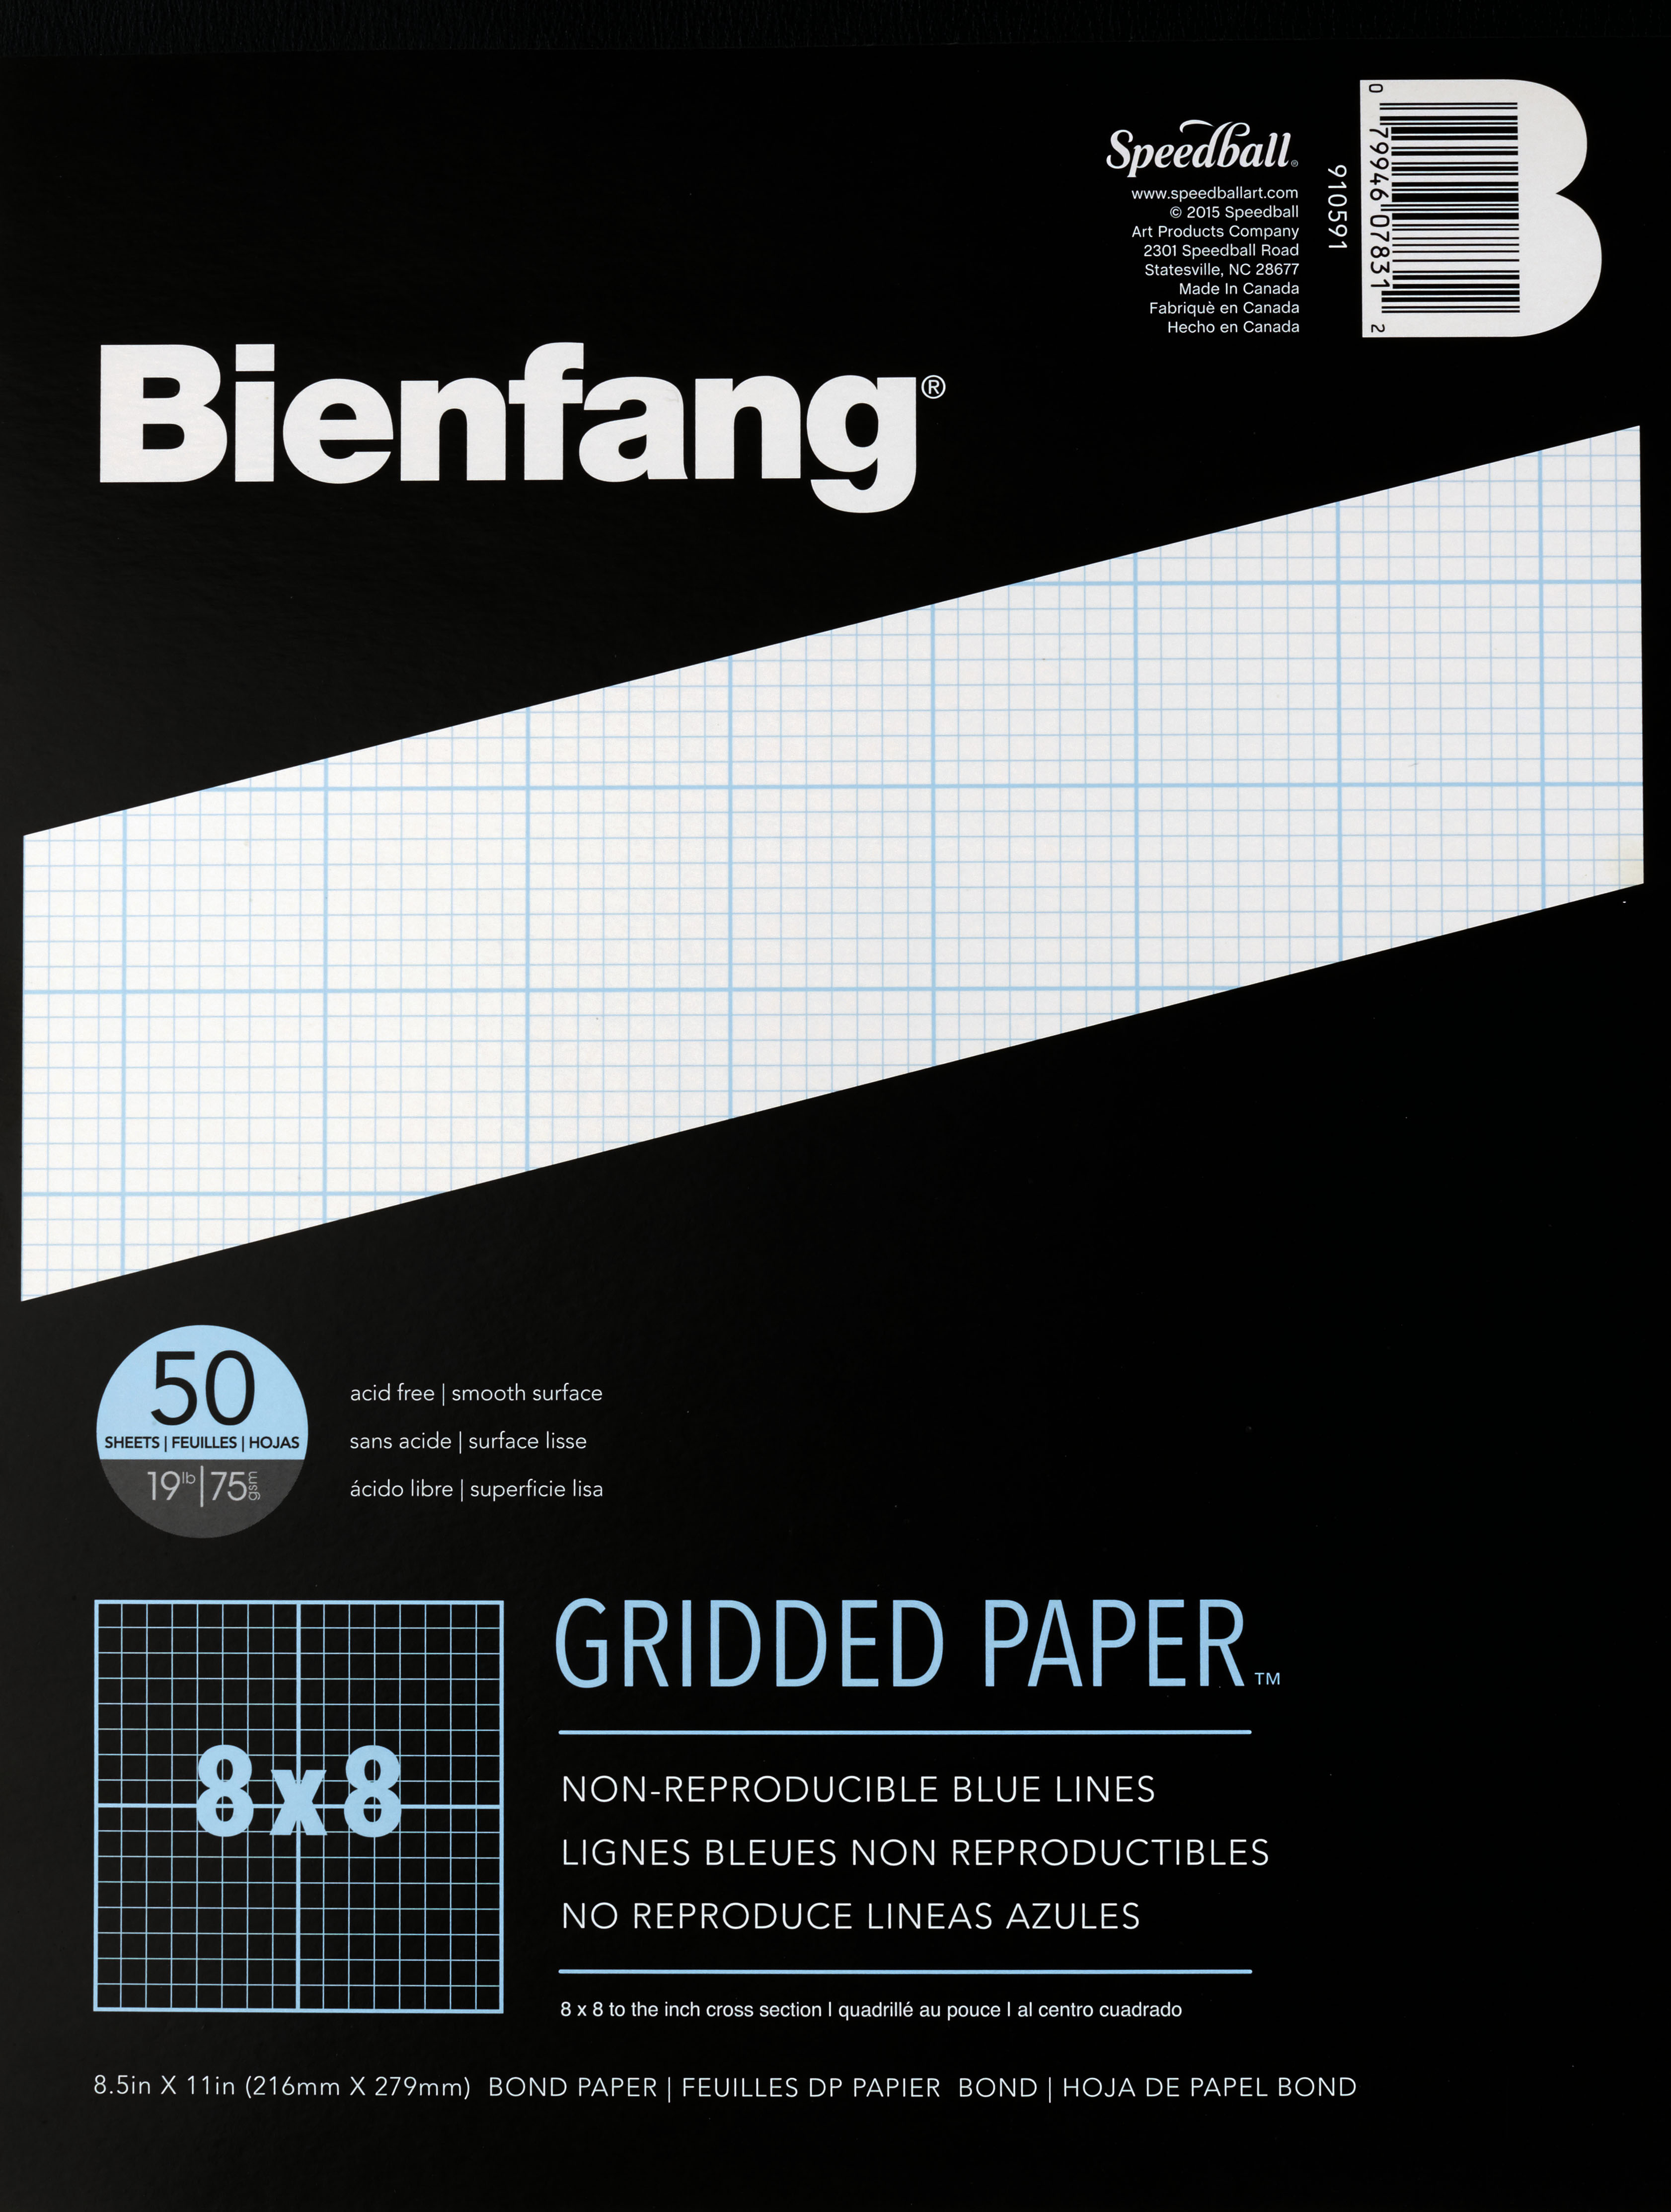 Speedball Bienfang Calligraphy Practice Paper Pad - 9 x 12 - 50 Sheets